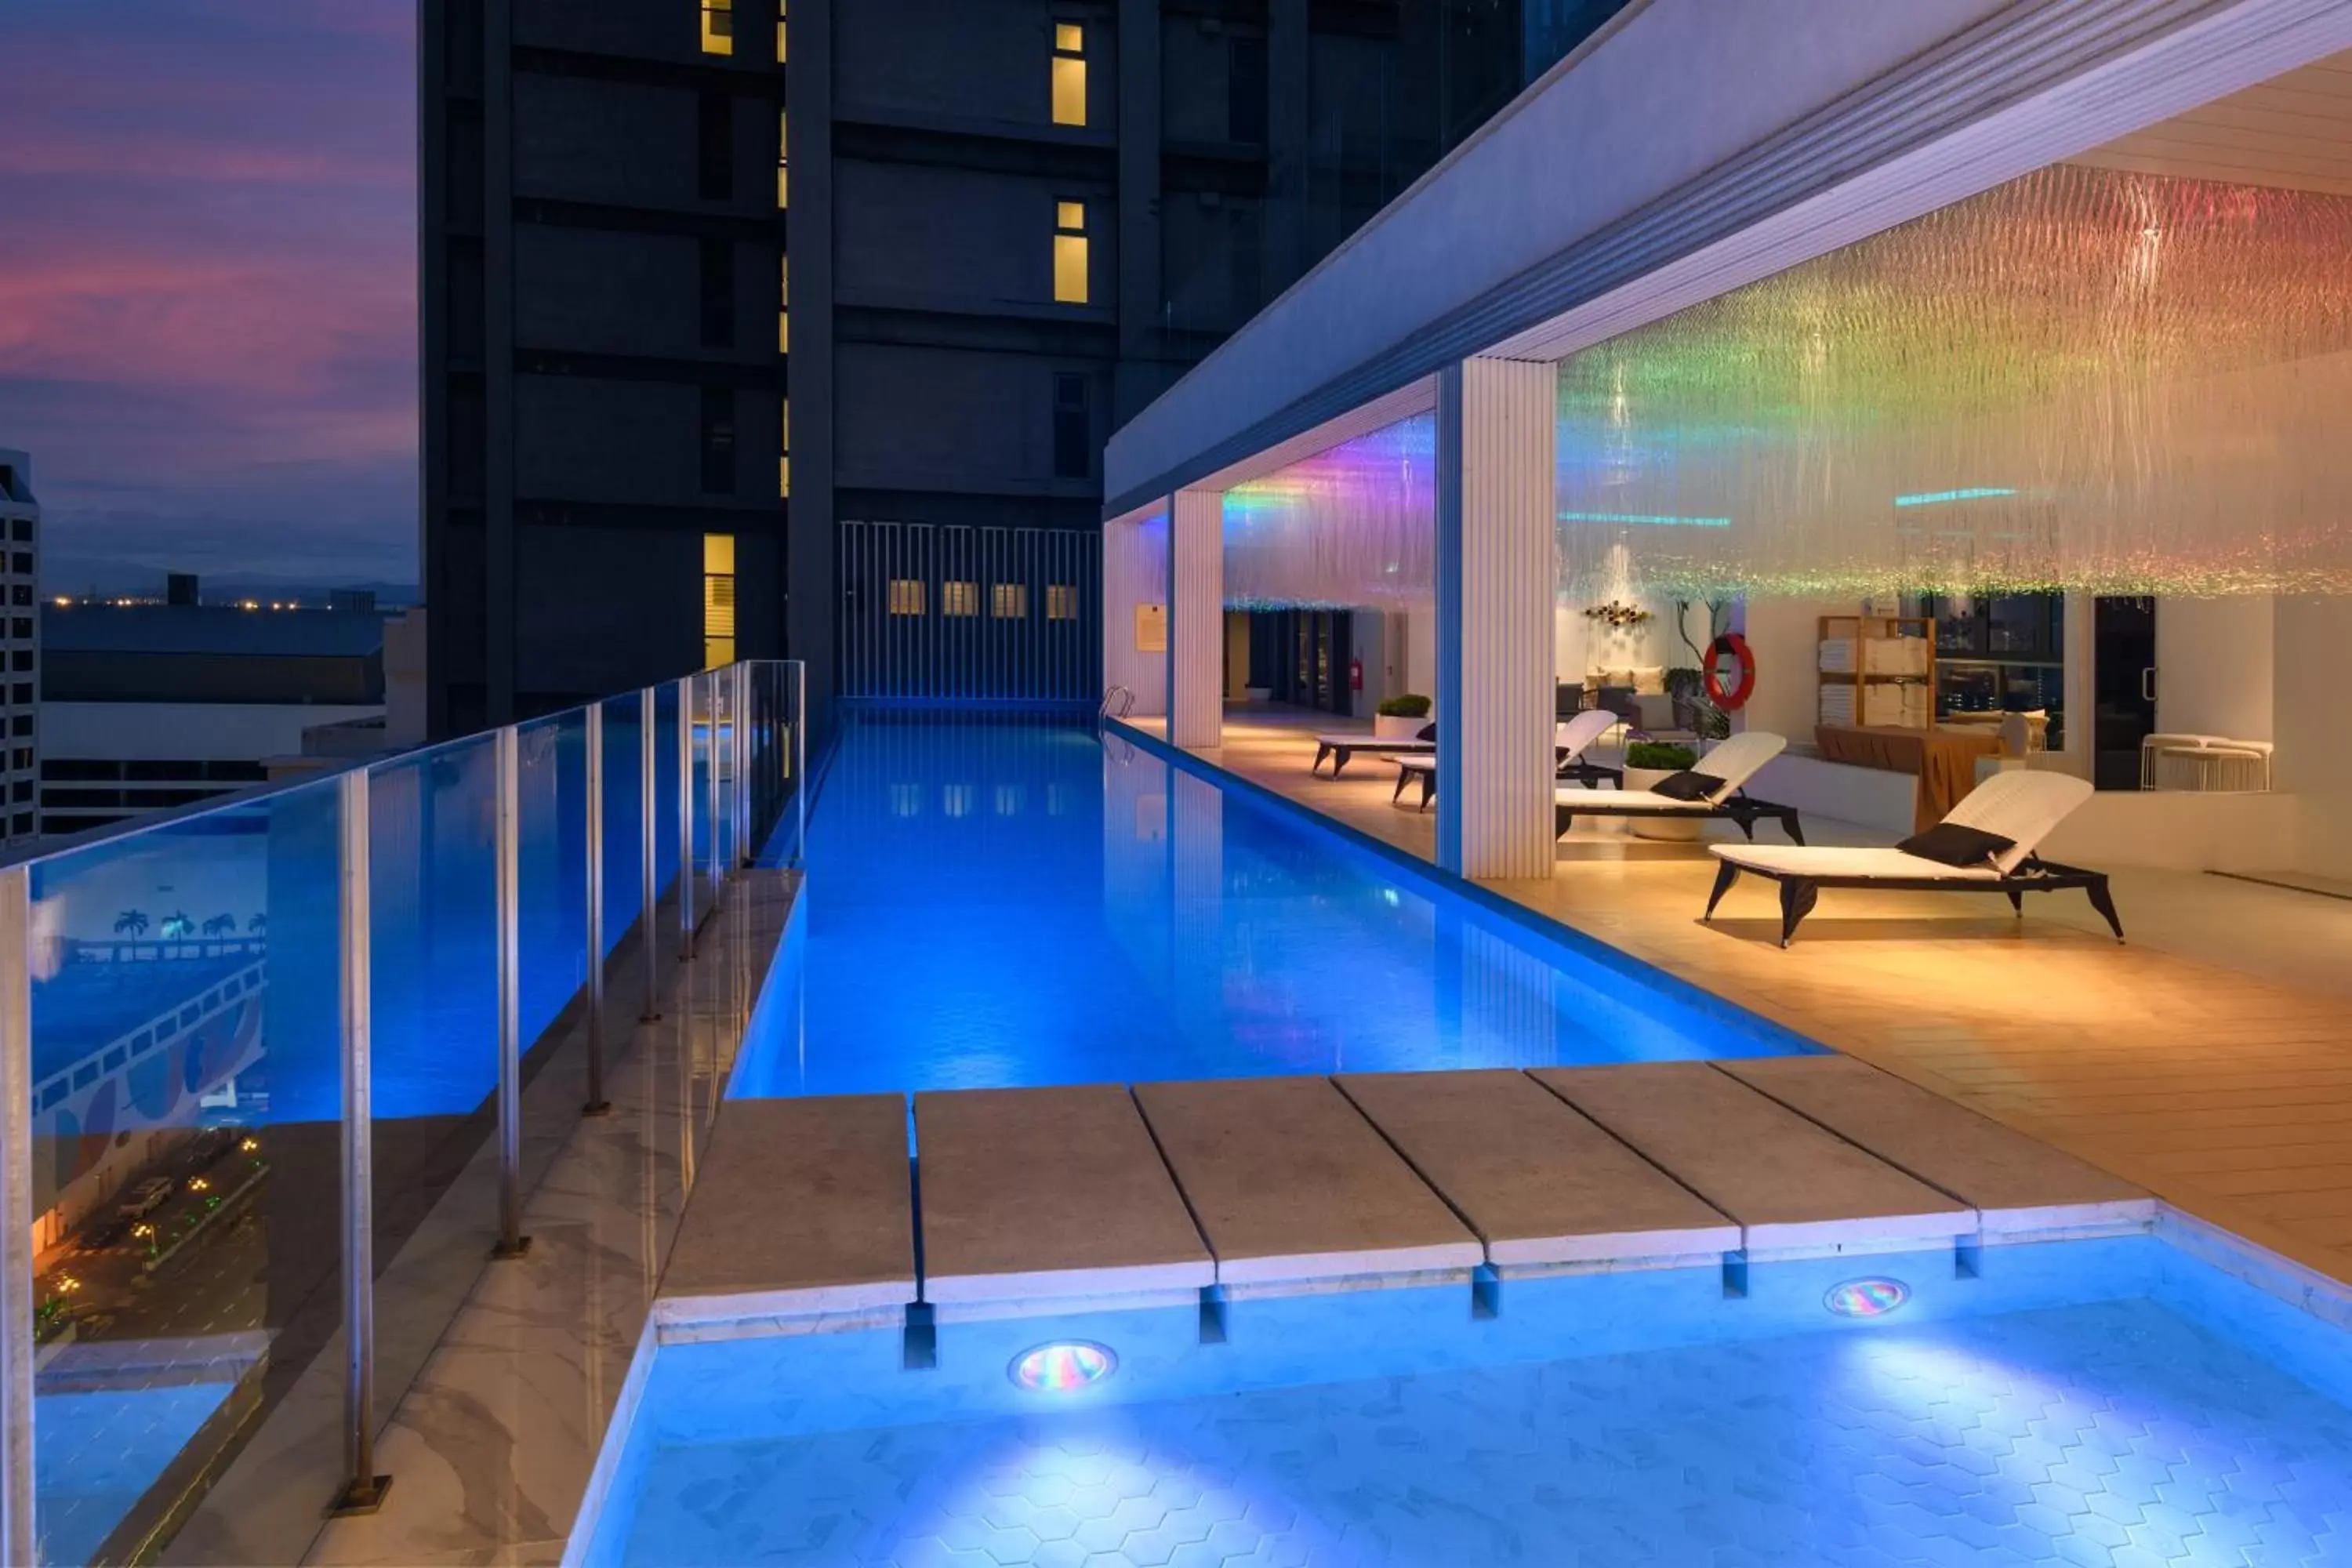 Swimming Pool in The Granite Luxury Hotel Penang